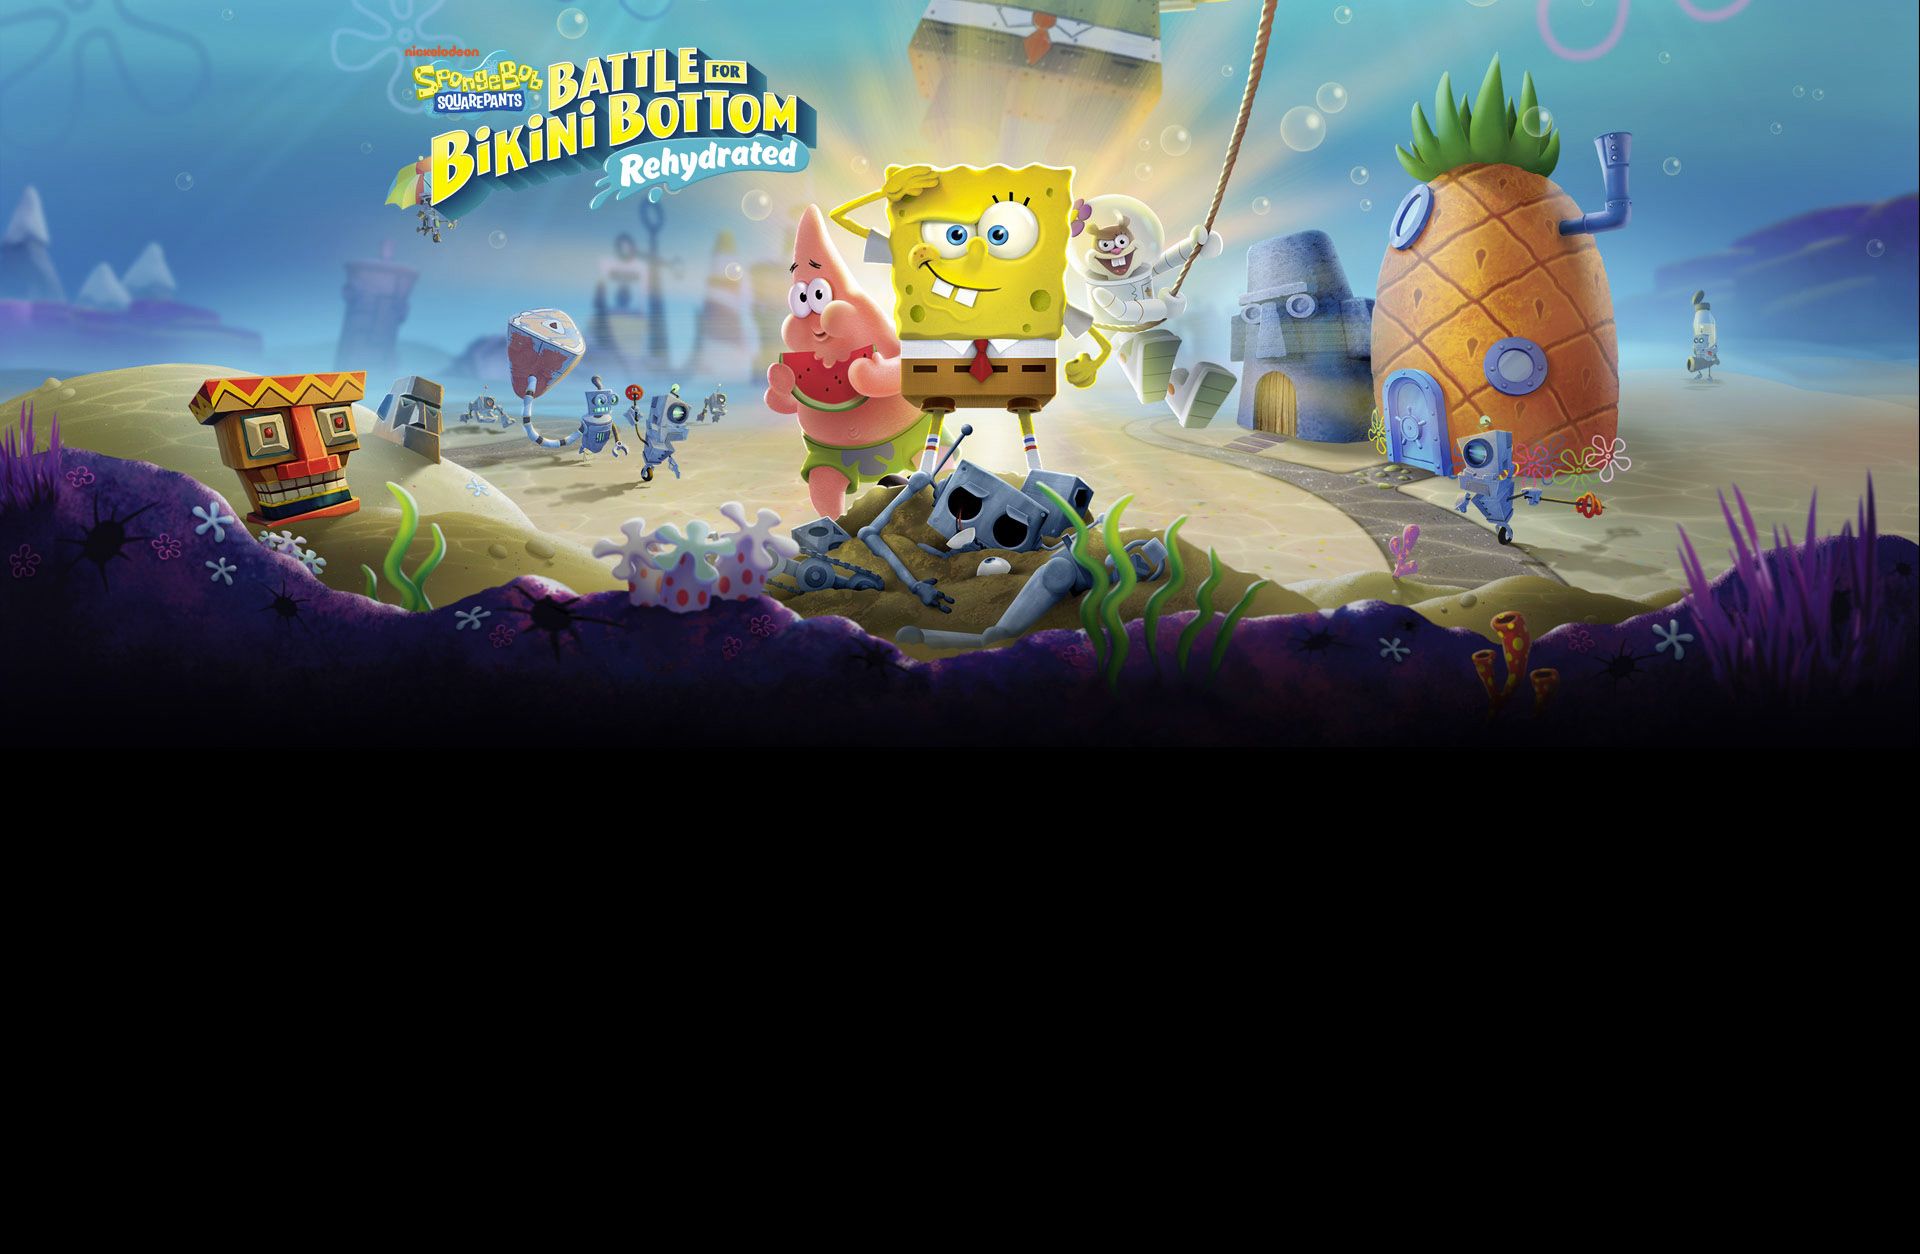 Buy SpongeBob SquarePants: Battle for Bikini Bottom